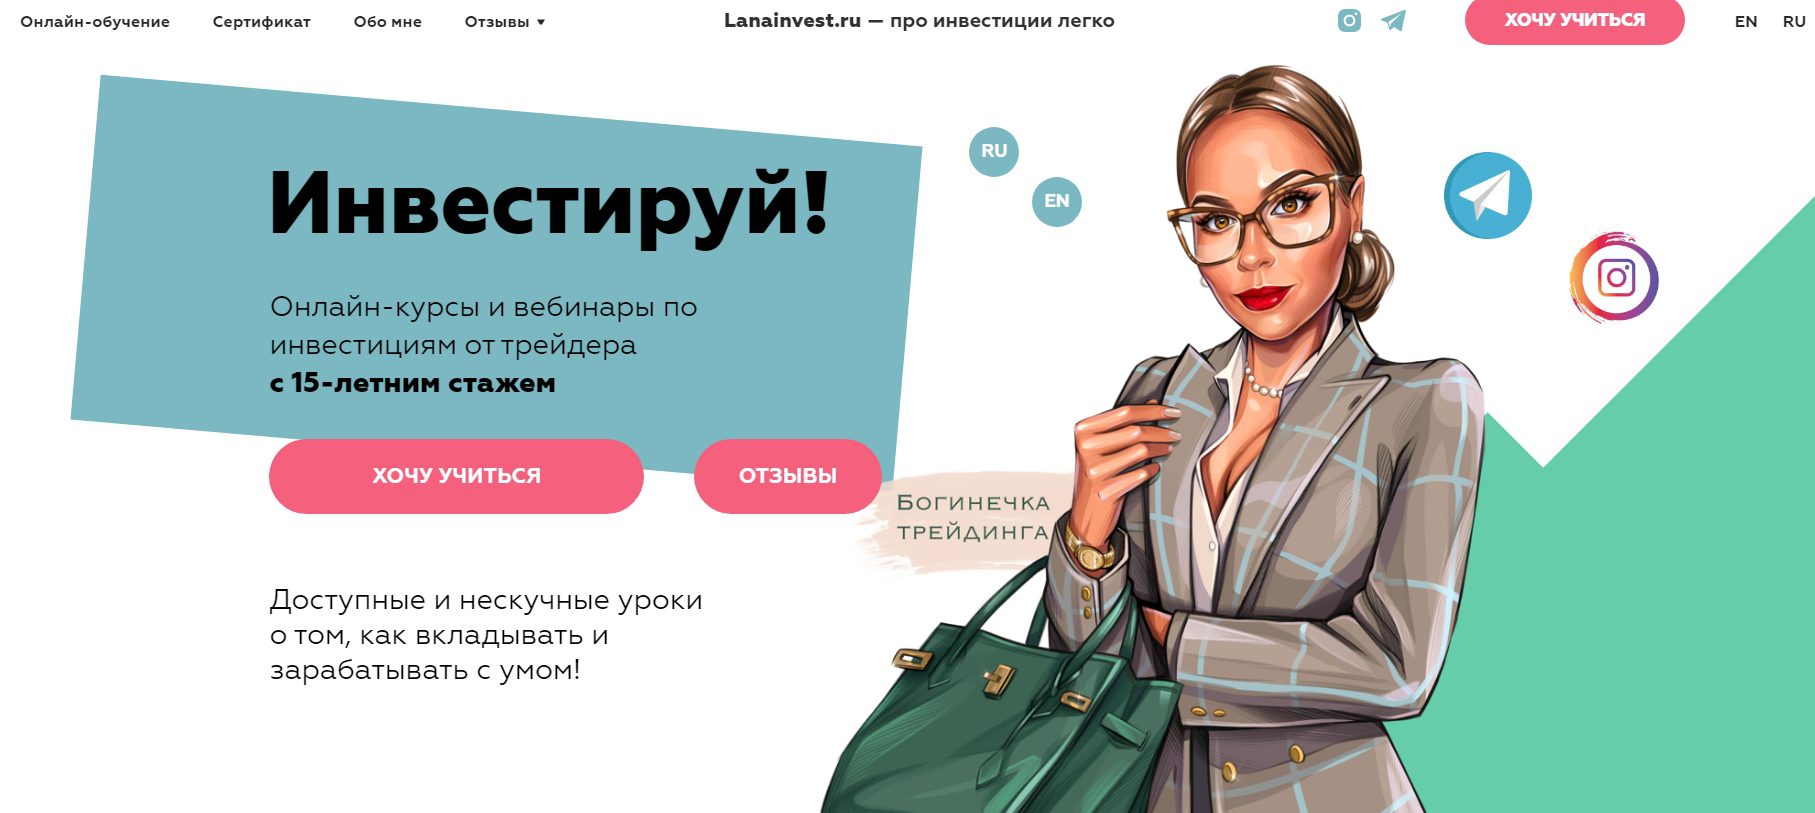 Сайт lanainvest.ru Ланы Нагорной